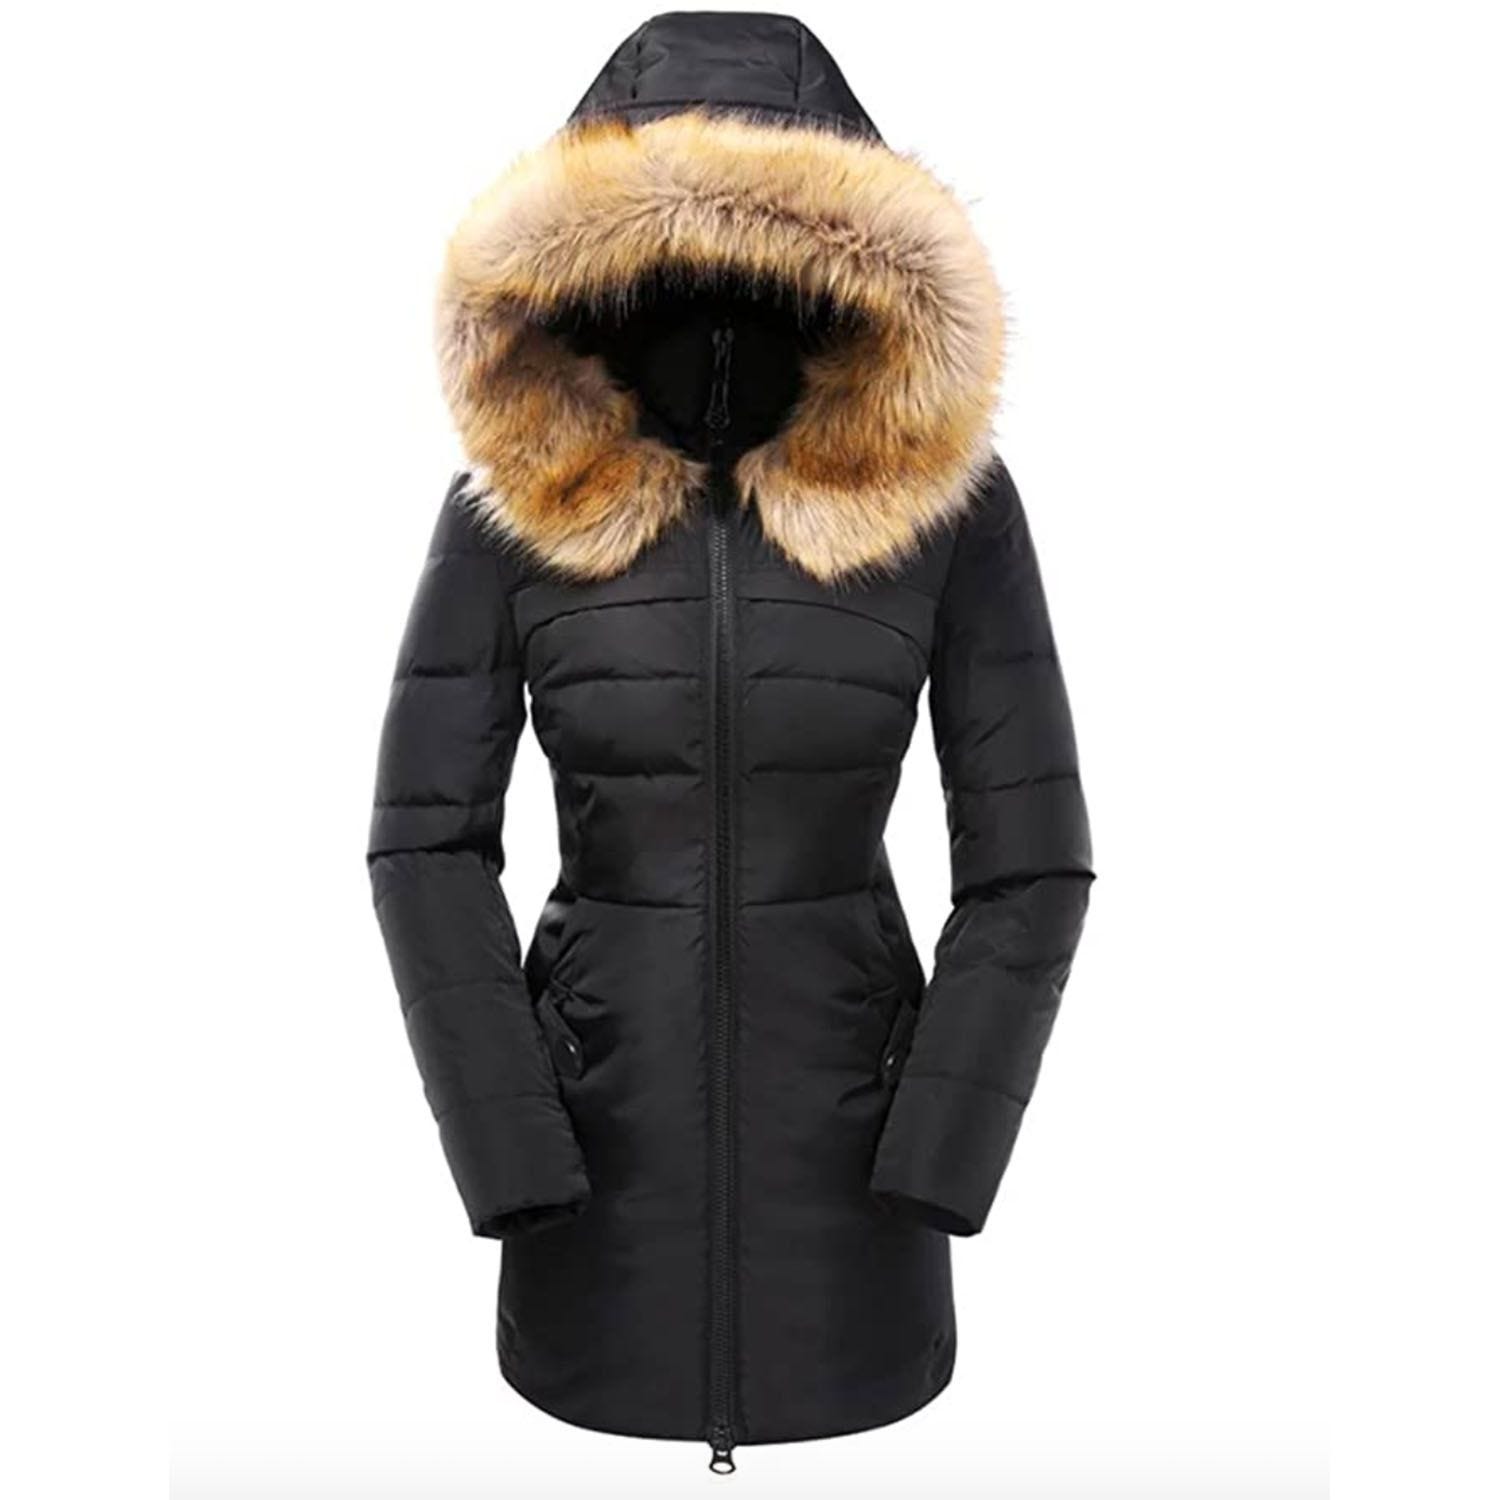 winter coats for women with hoods